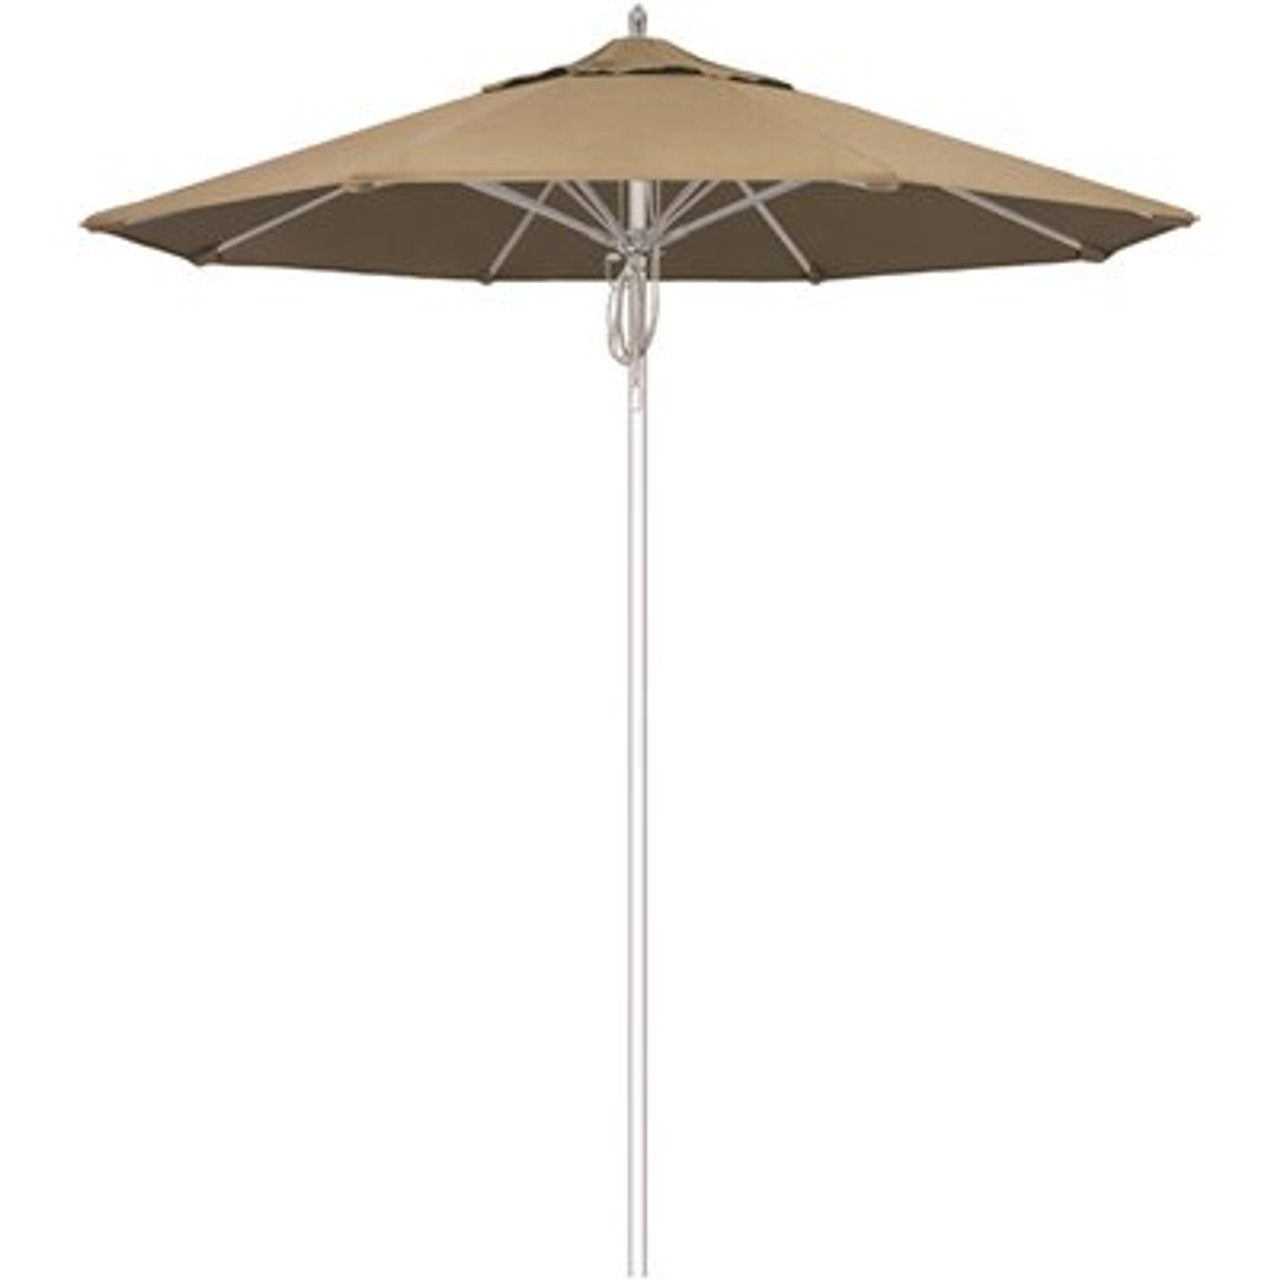 7.5 ft. Silver Aluminum Commercial Market Patio Umbrella Fiberglass Ribs and Pulley Lift in Heather Beige Sunbrella